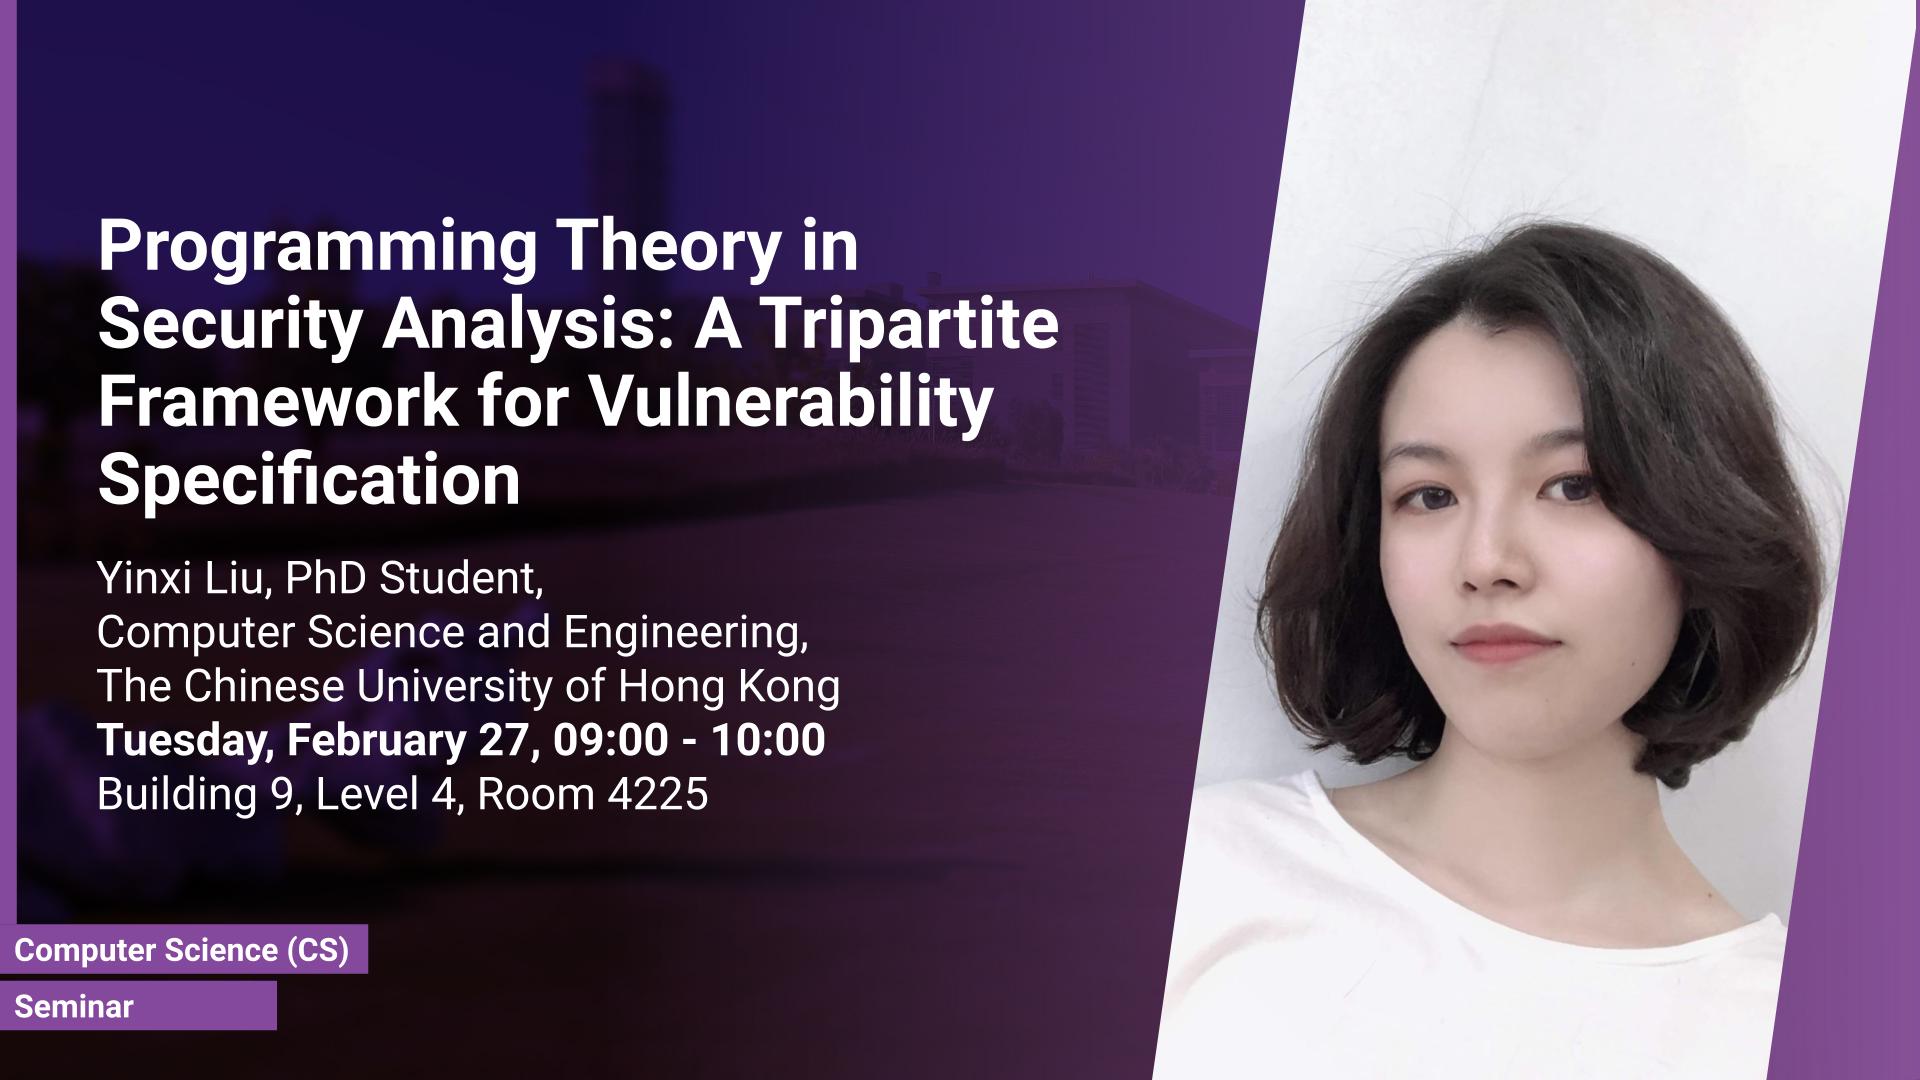 KAUST-CEMSE-CS-Seminar-Yinxi-Liu-Programming Theory in Security Analysis_ A Tripartite Framework for Vulnerability Specification.jpg